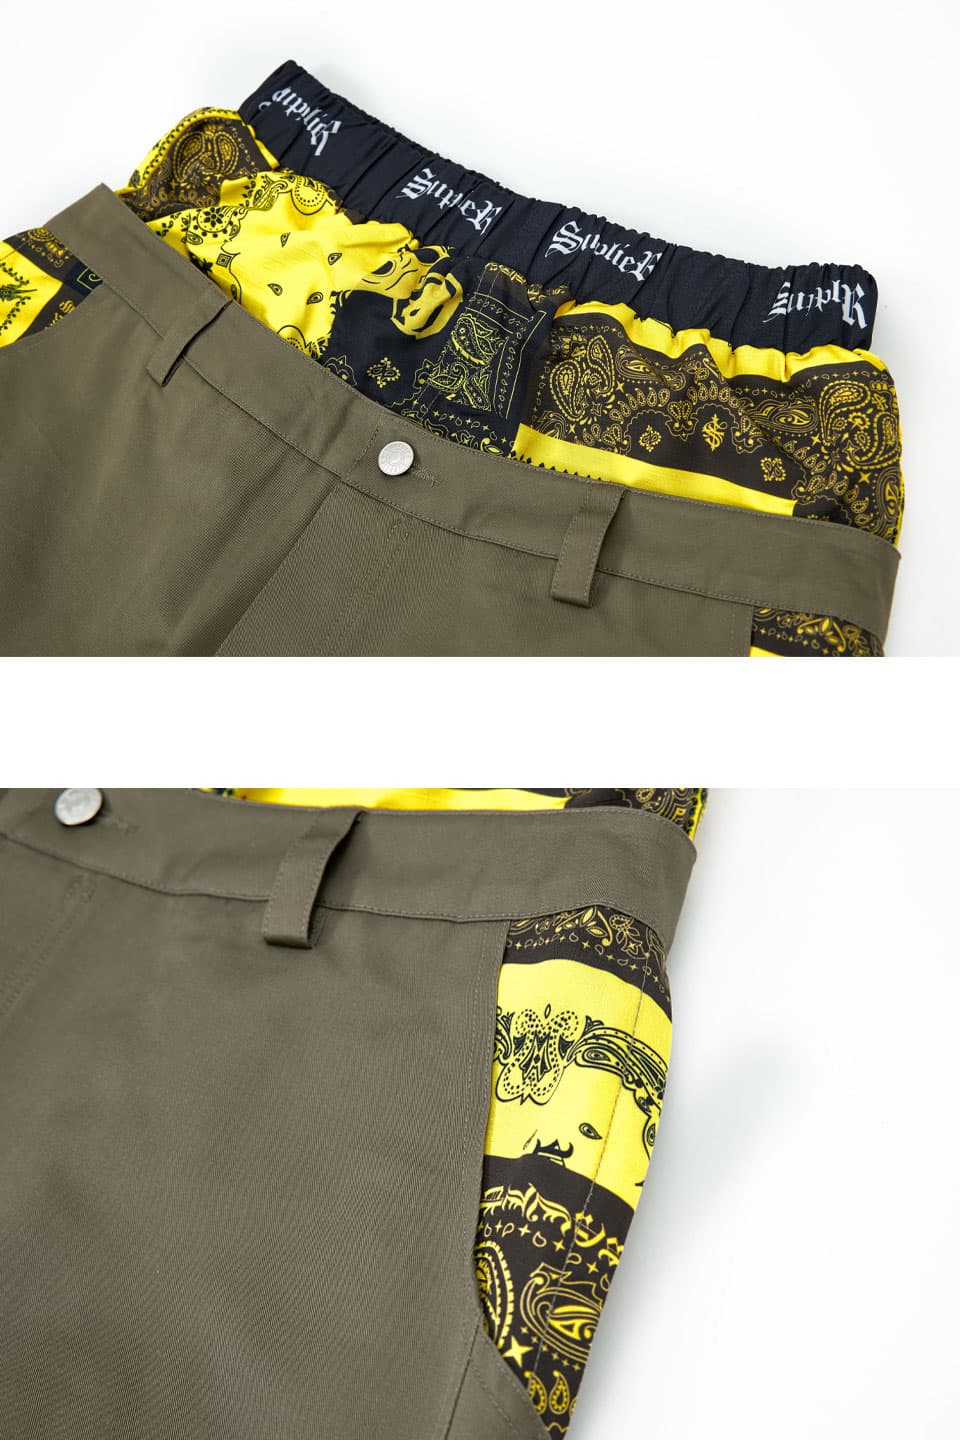 Double Layer Bandana Cargo Shorts